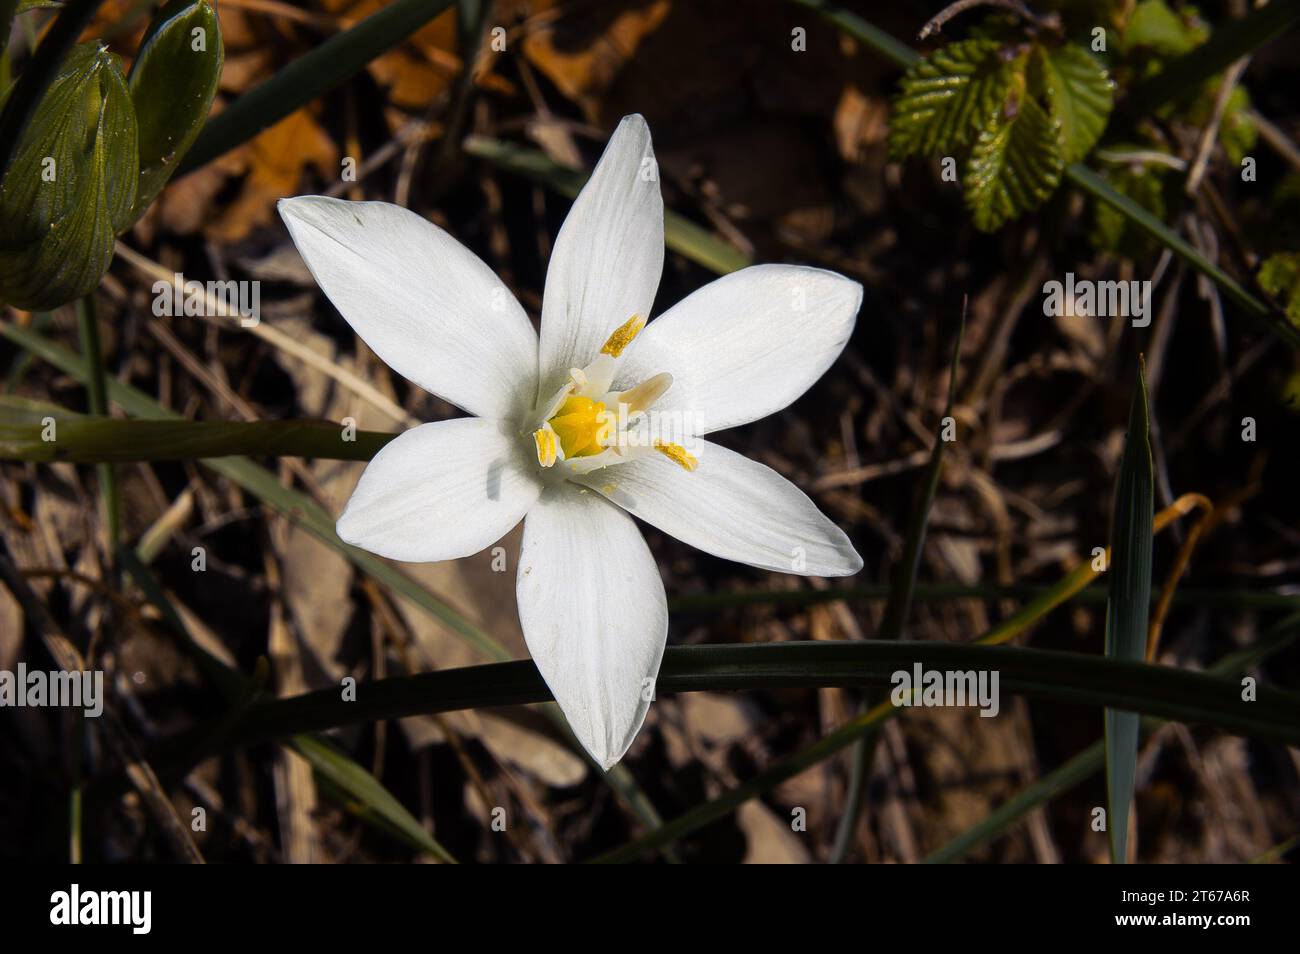 Star-of-Bethlehem flower, also known as Christmas Star, under the warm italian sun Stock Photo